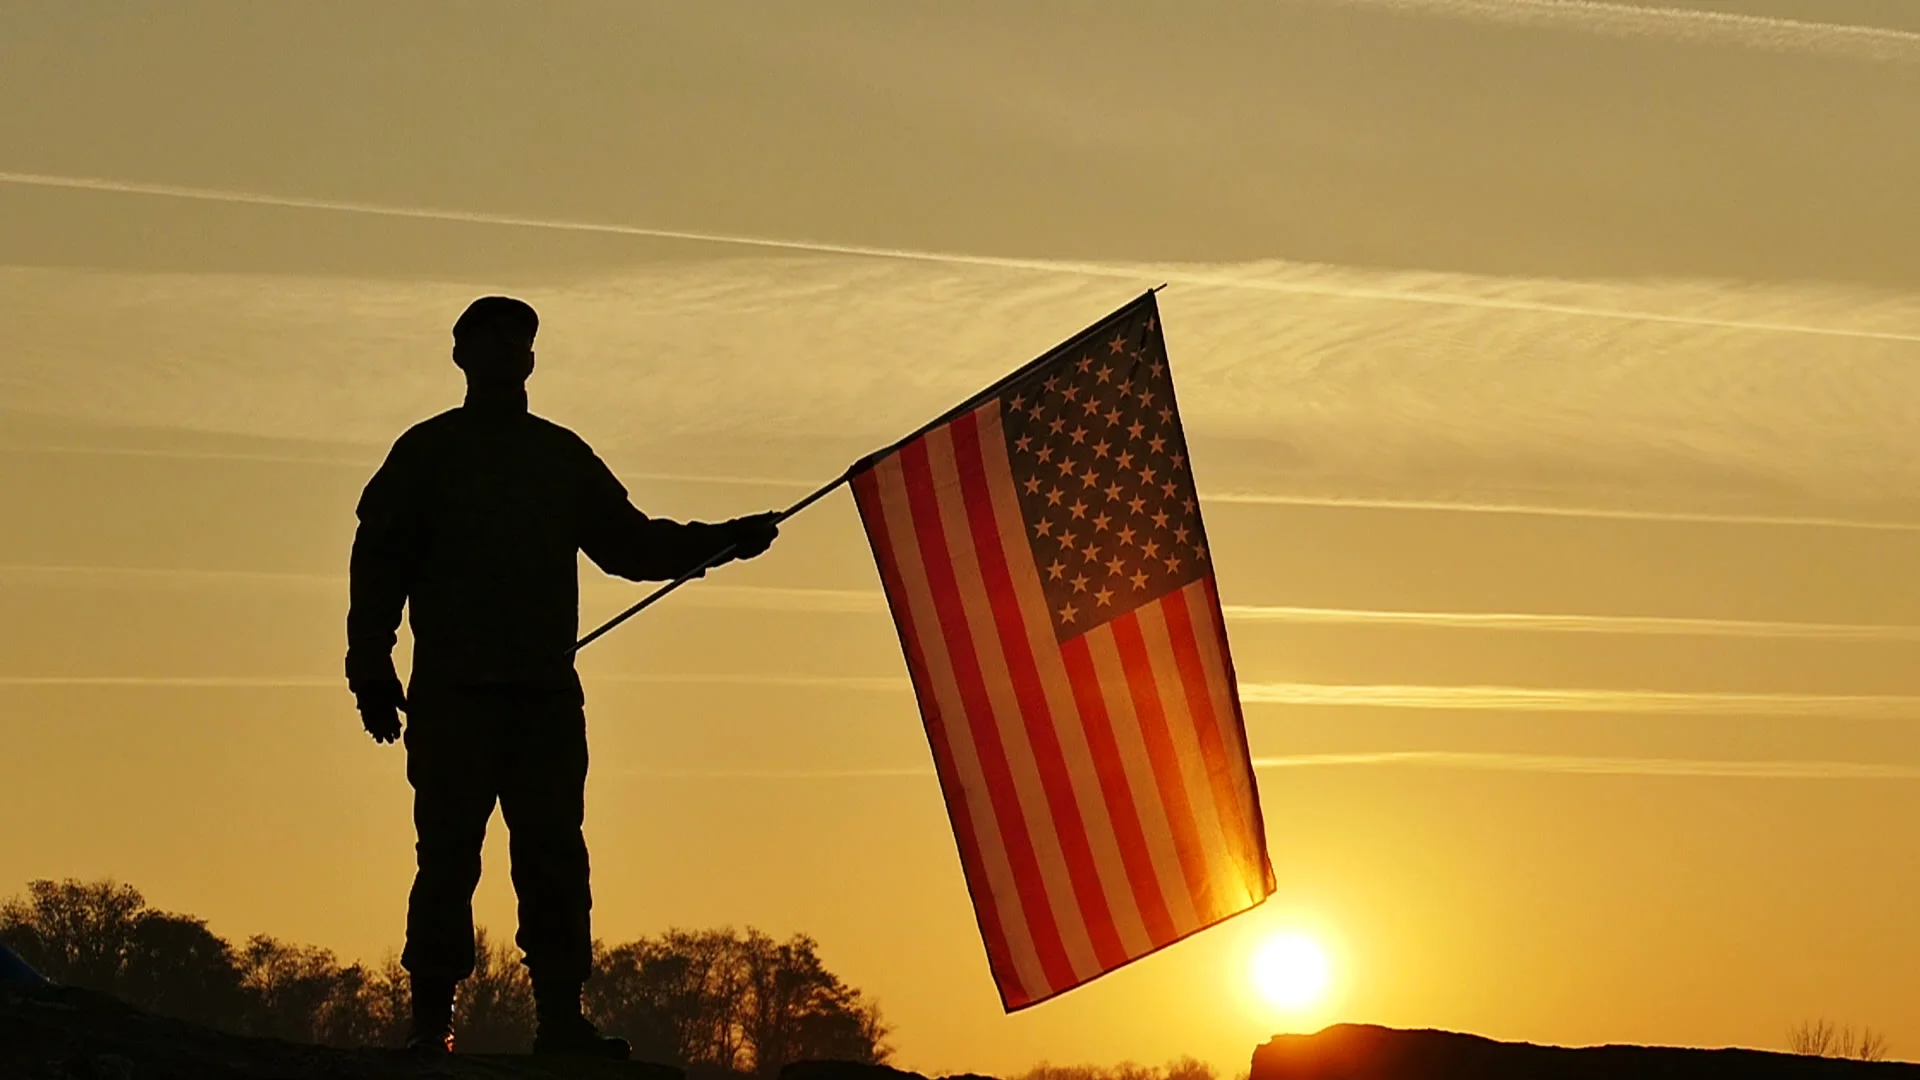 soldier-salute-american-flag-against-070120278_prevstill.jpeg